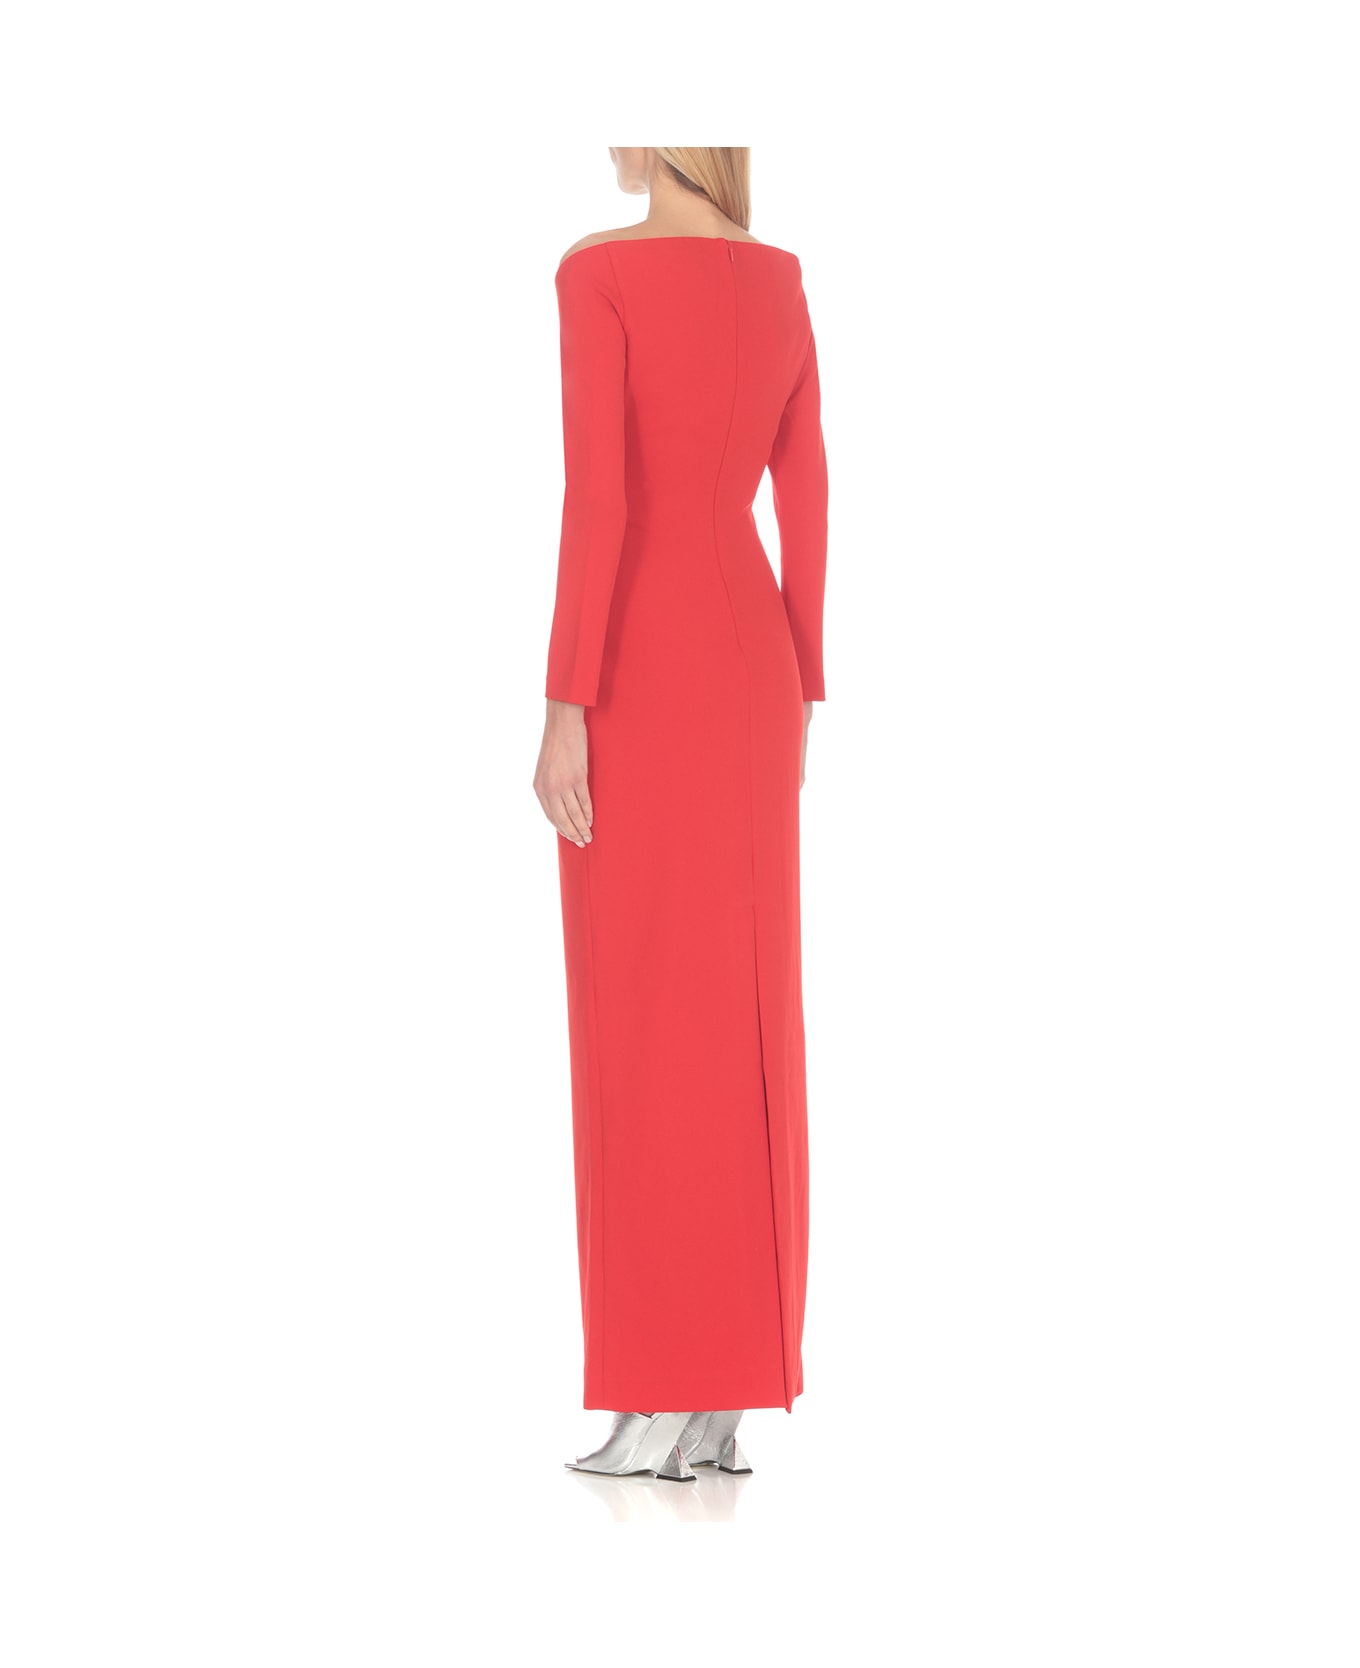 Solace London Tara Maxi Dress - Red